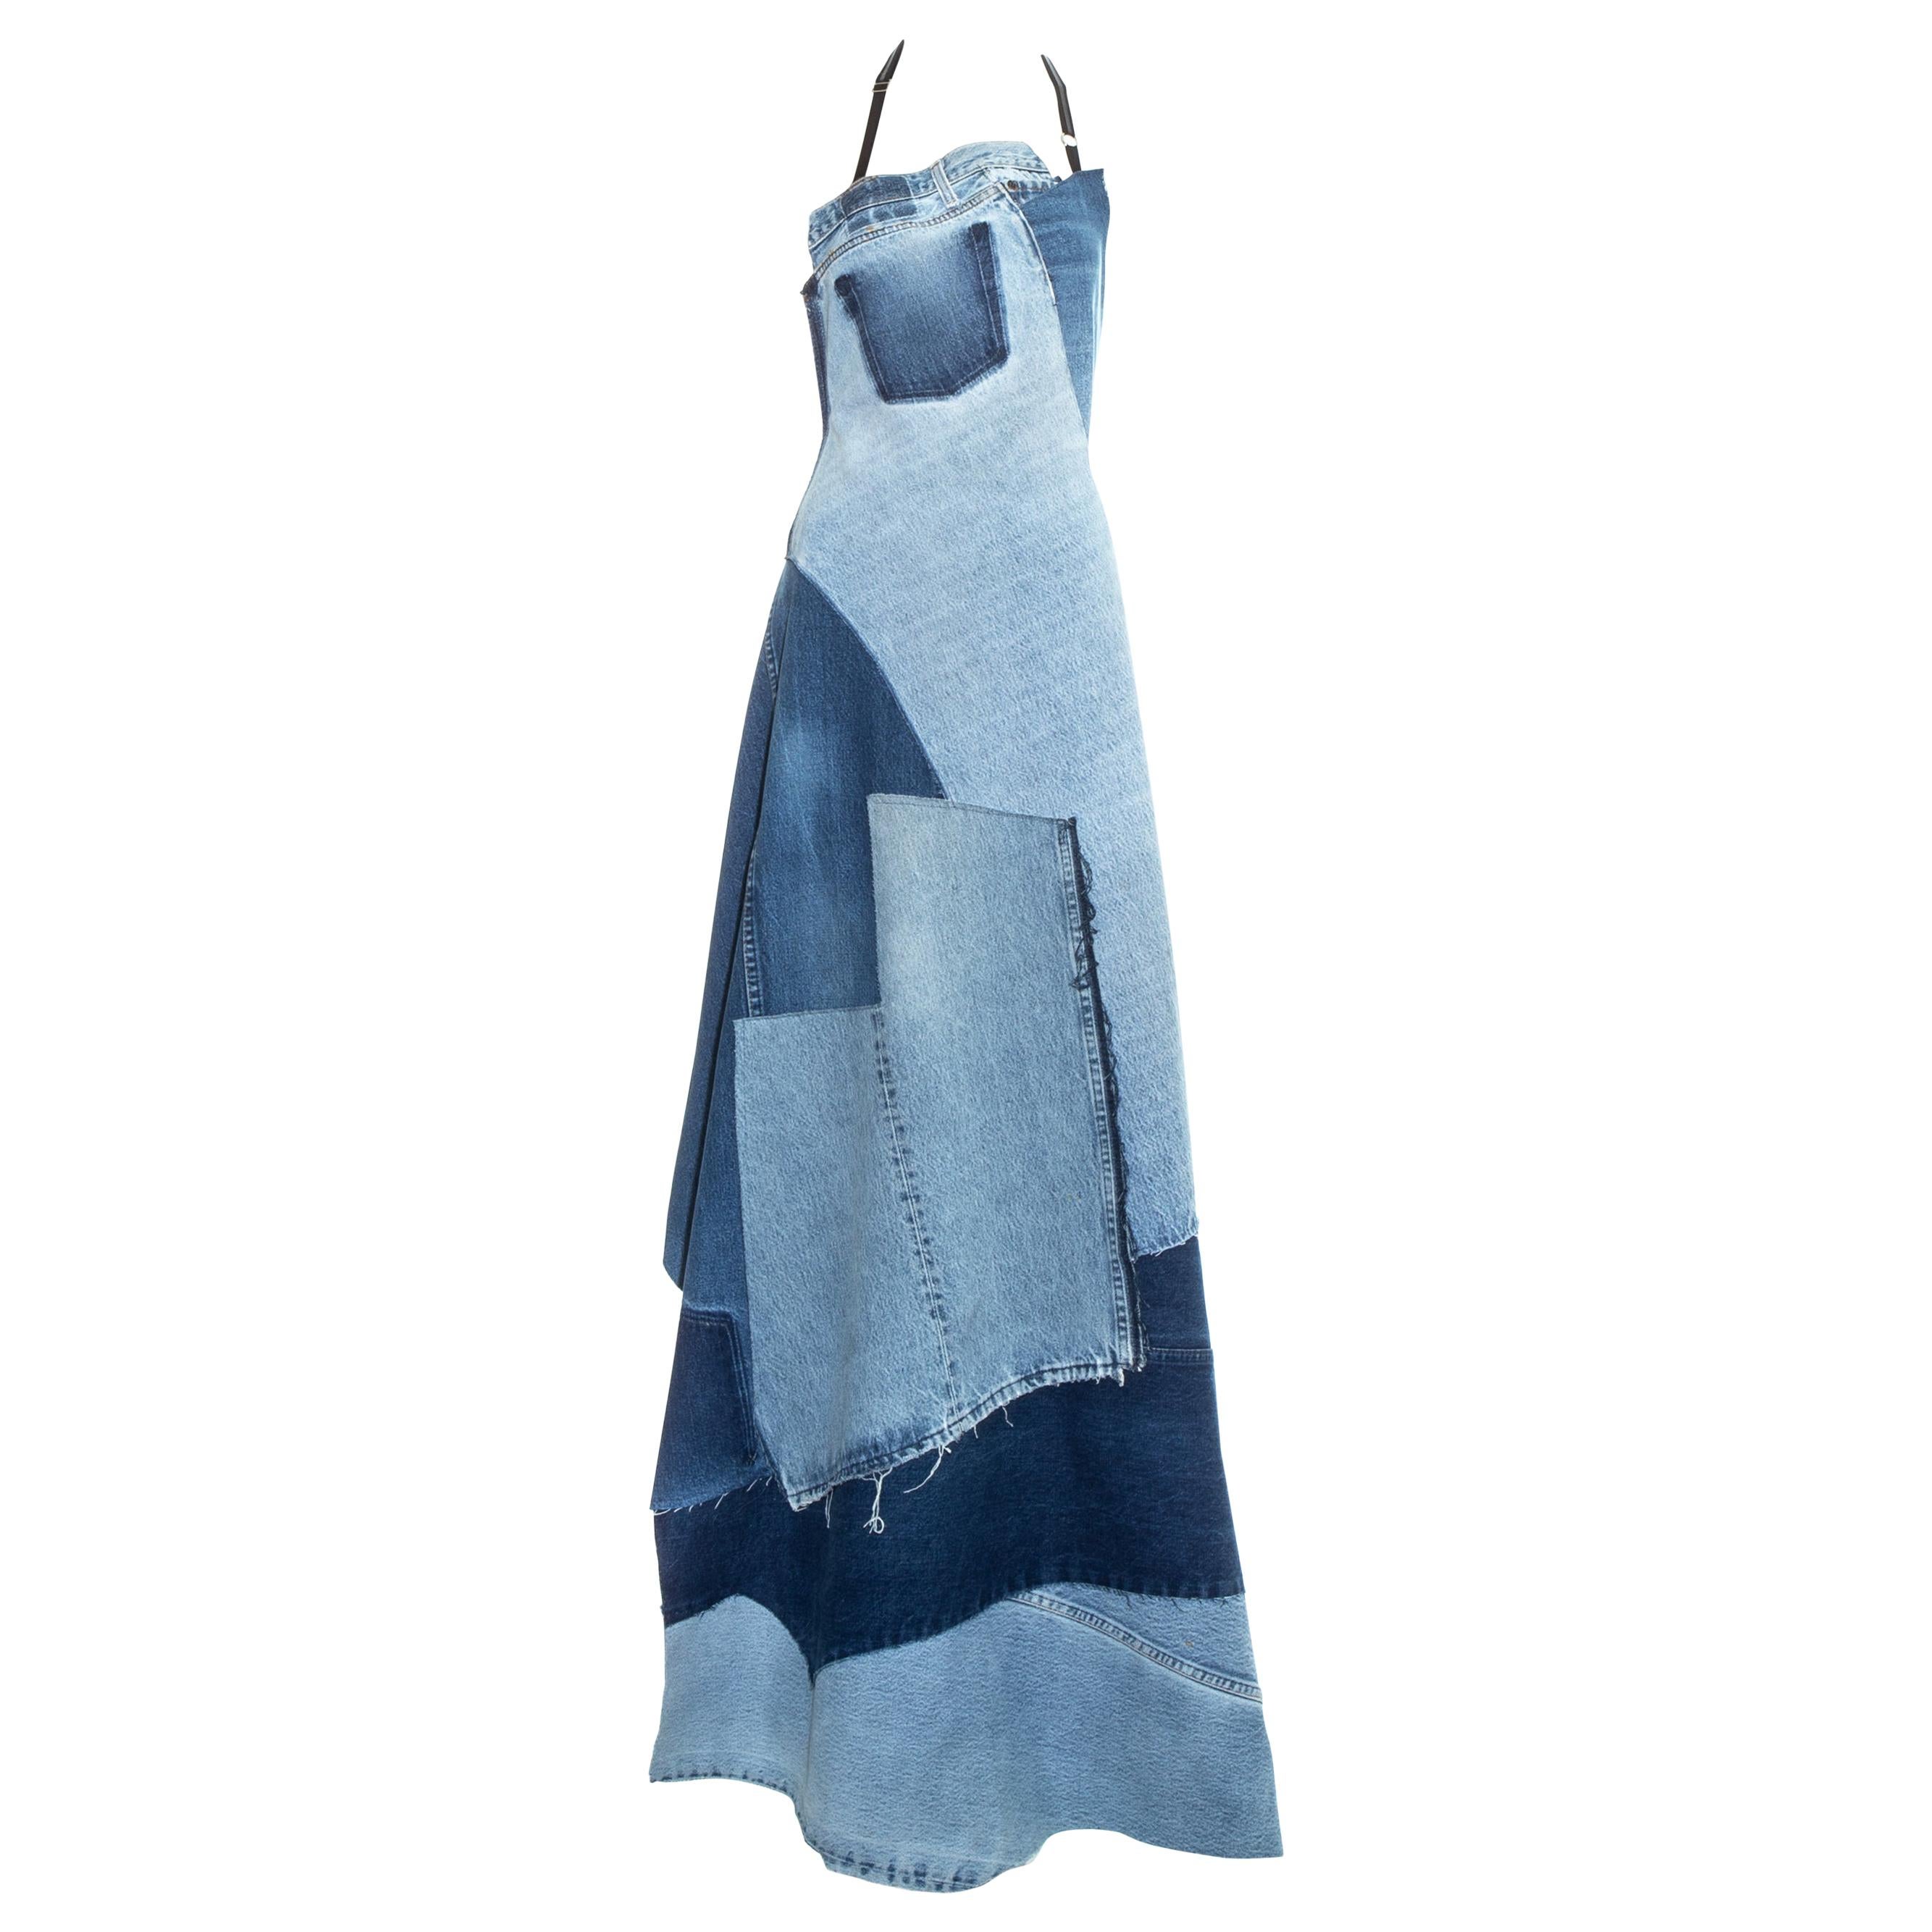 Margiela Artisanal patchwork denim apron dress, ss 1999